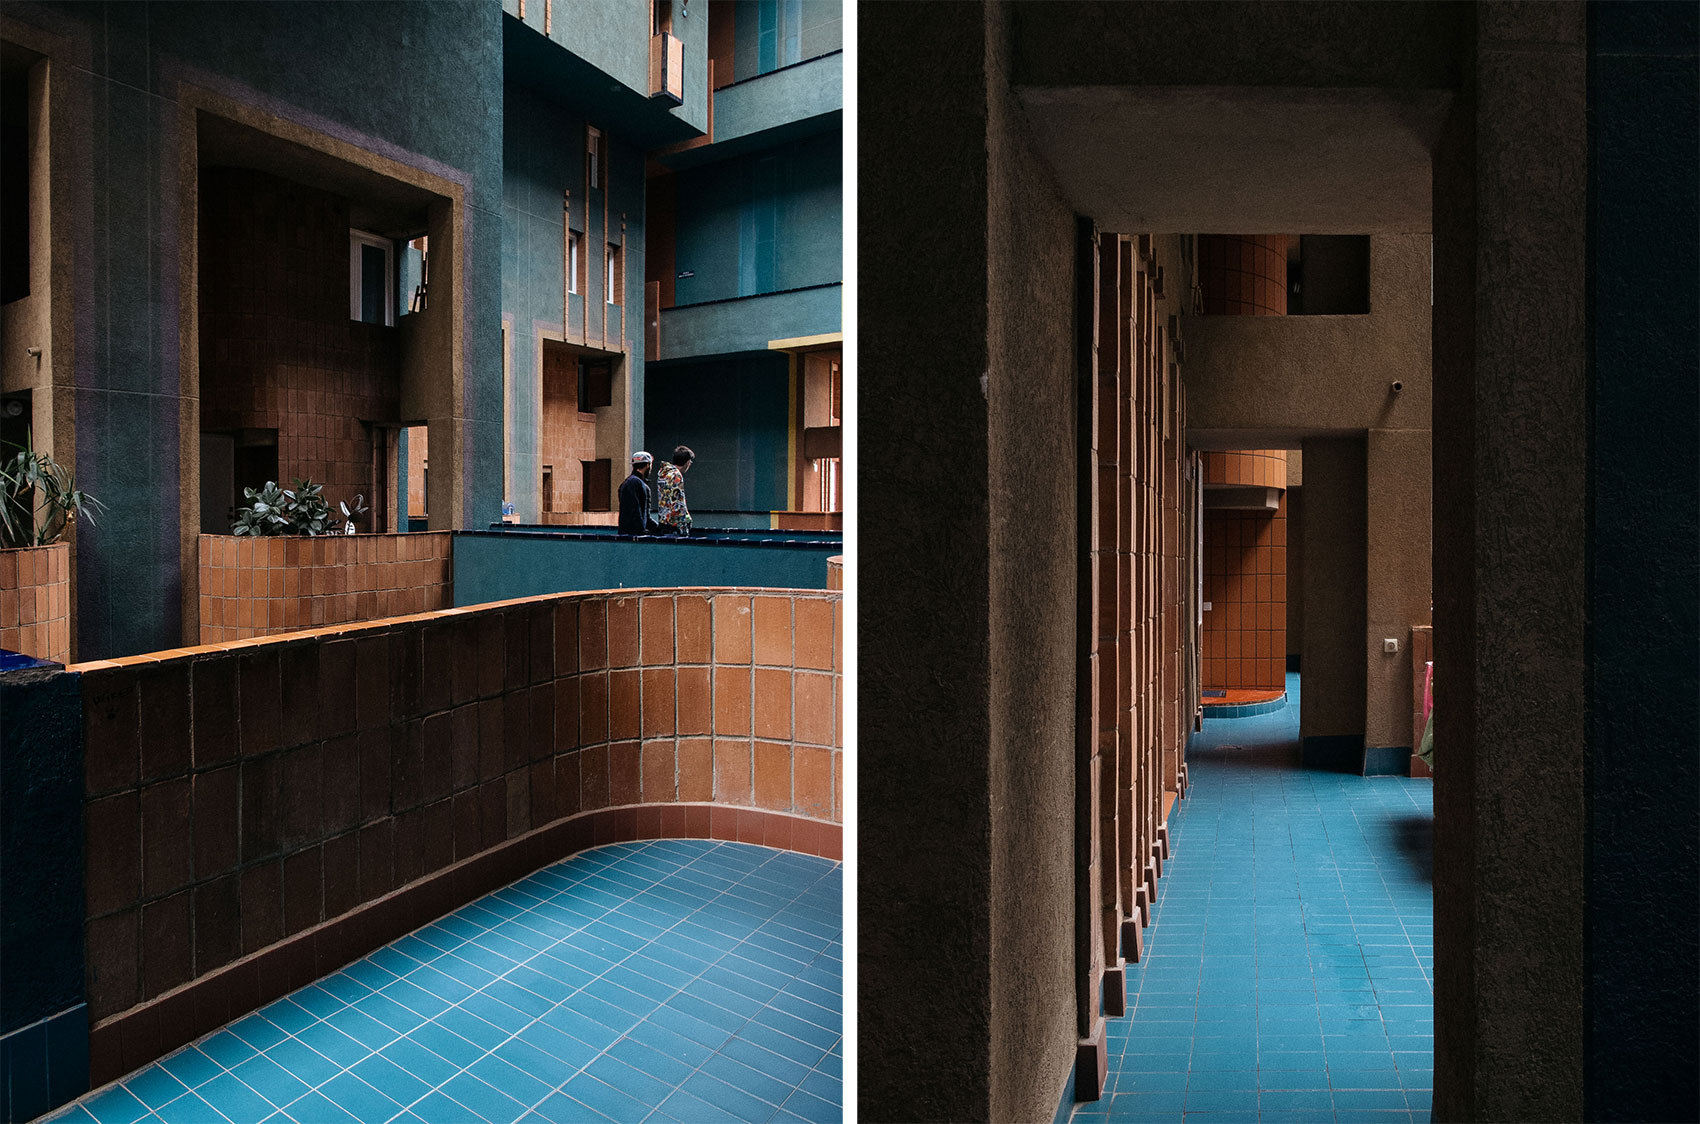 Hallways inside Walden 7 in Barcelona by architect Ricardo Bofill